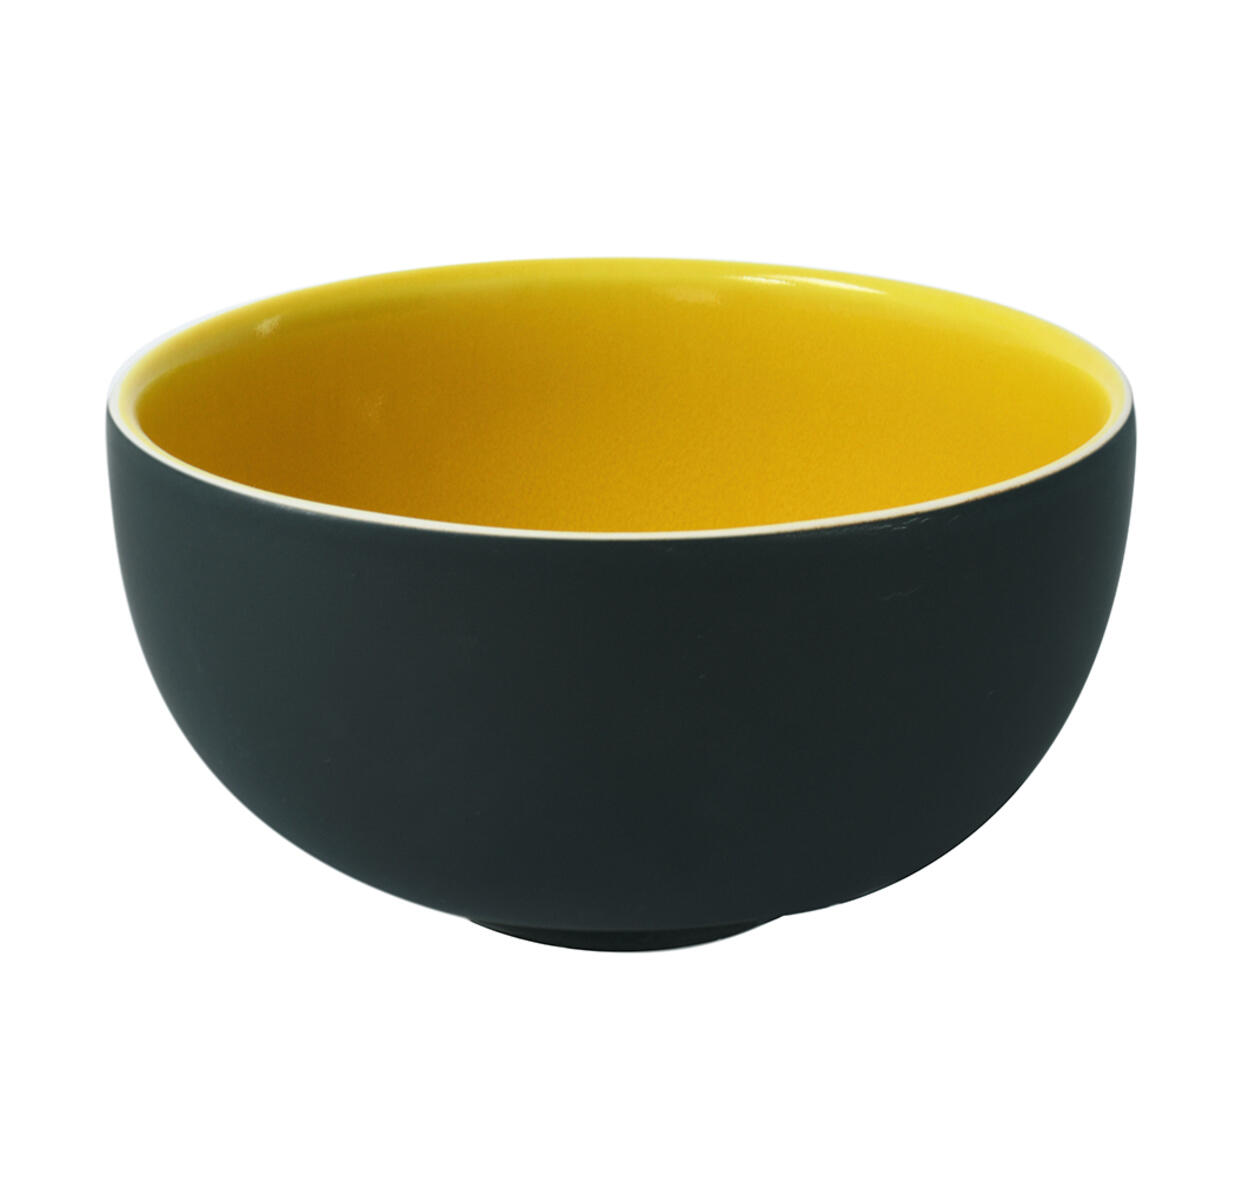 serving bowl m tourron citron ceramic manufacturer